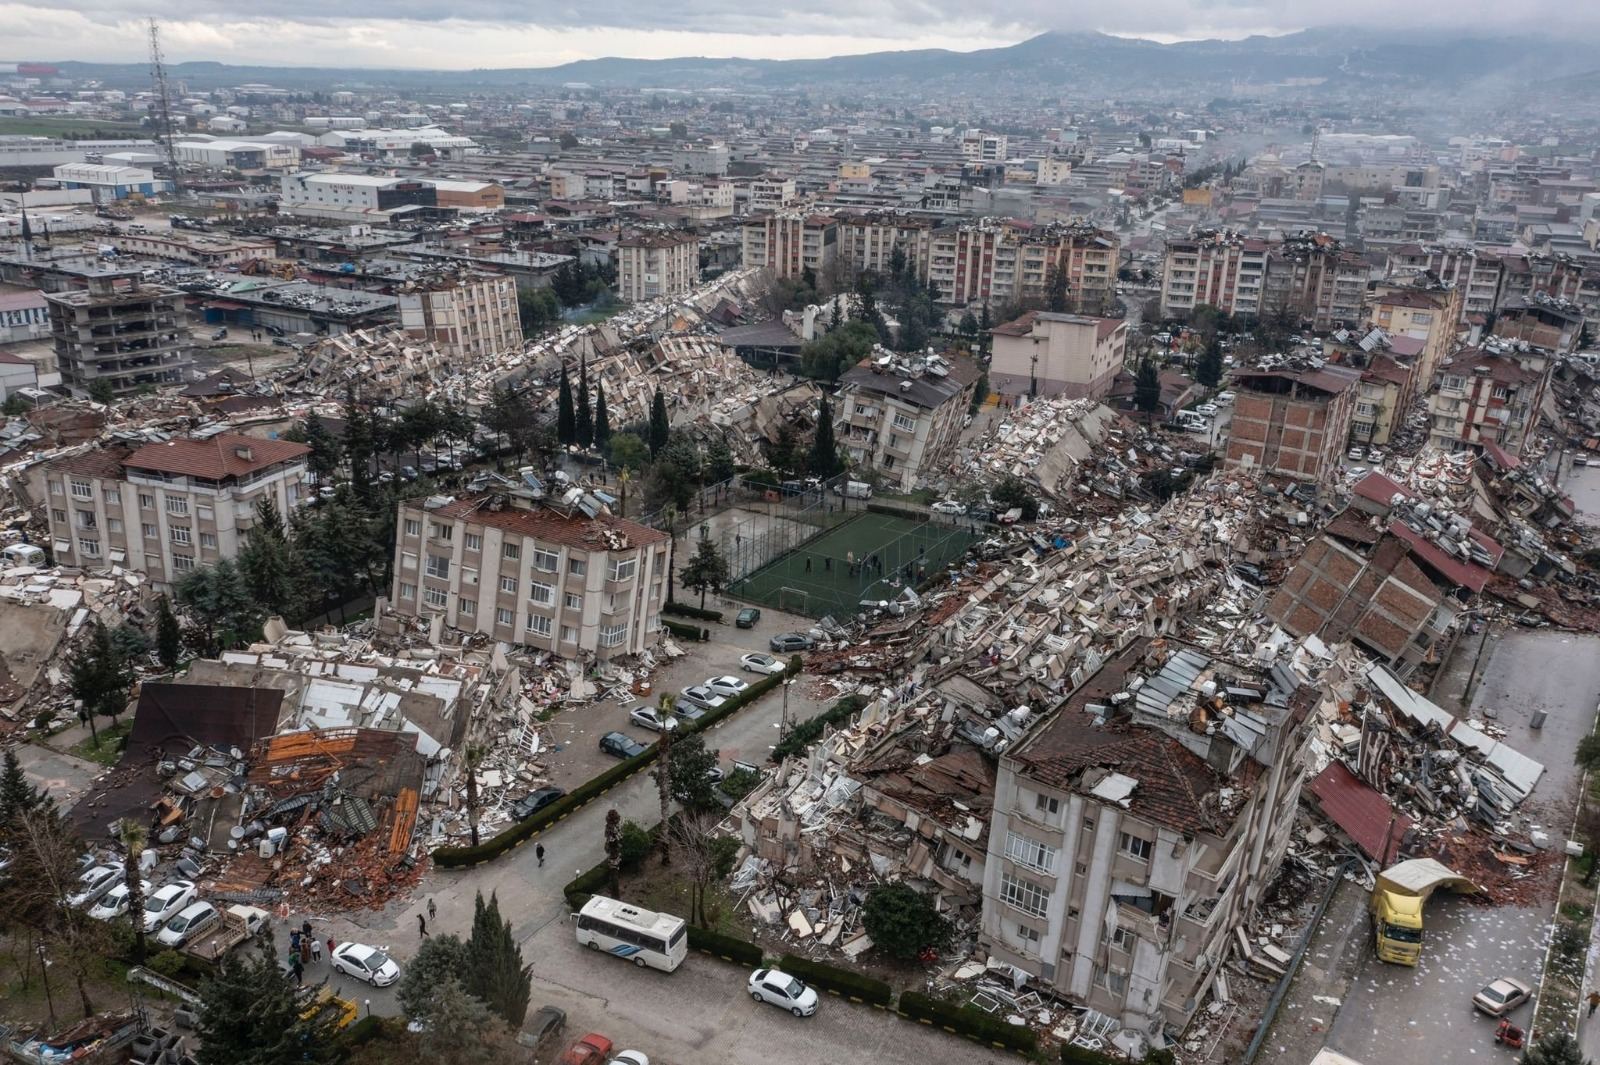 Türkiye shares update on earthquake death toll